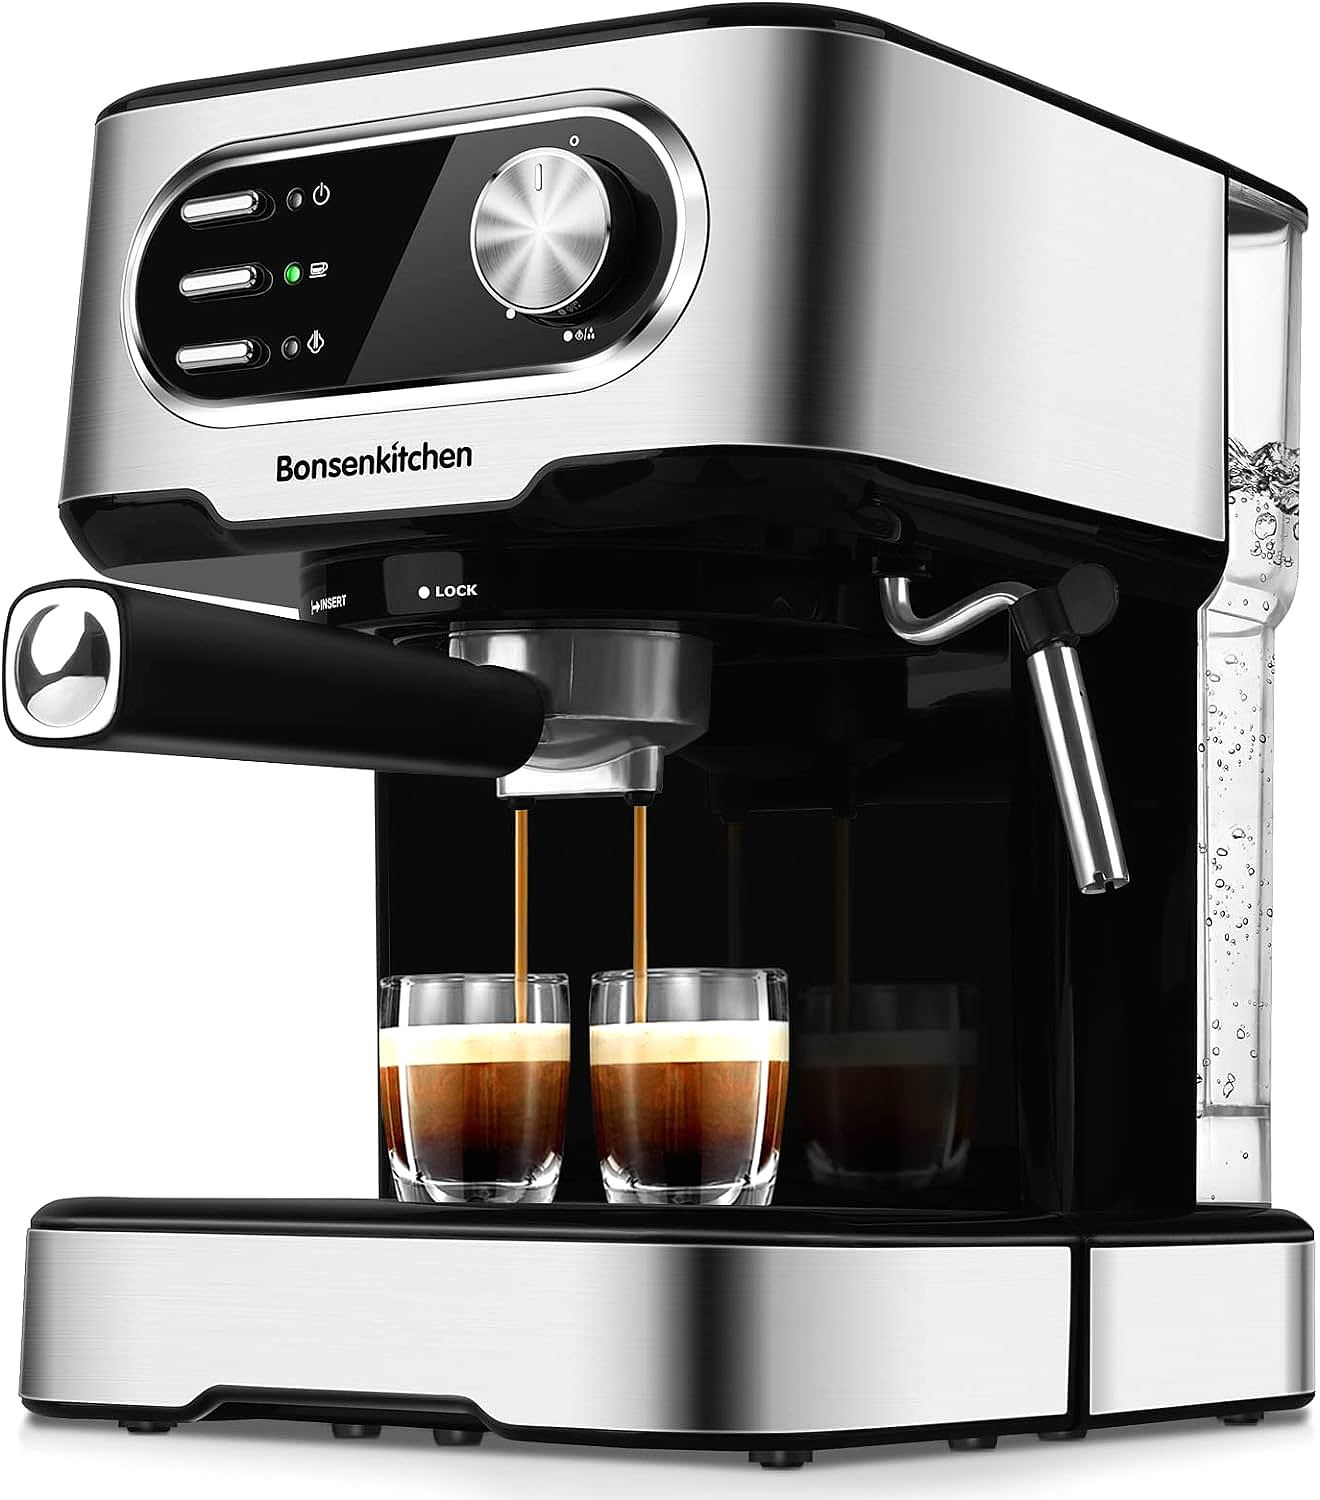 Bonsenkitchen CM8008 Espresso Machine: A Budget-Friendly Espresso Maker That Delivers